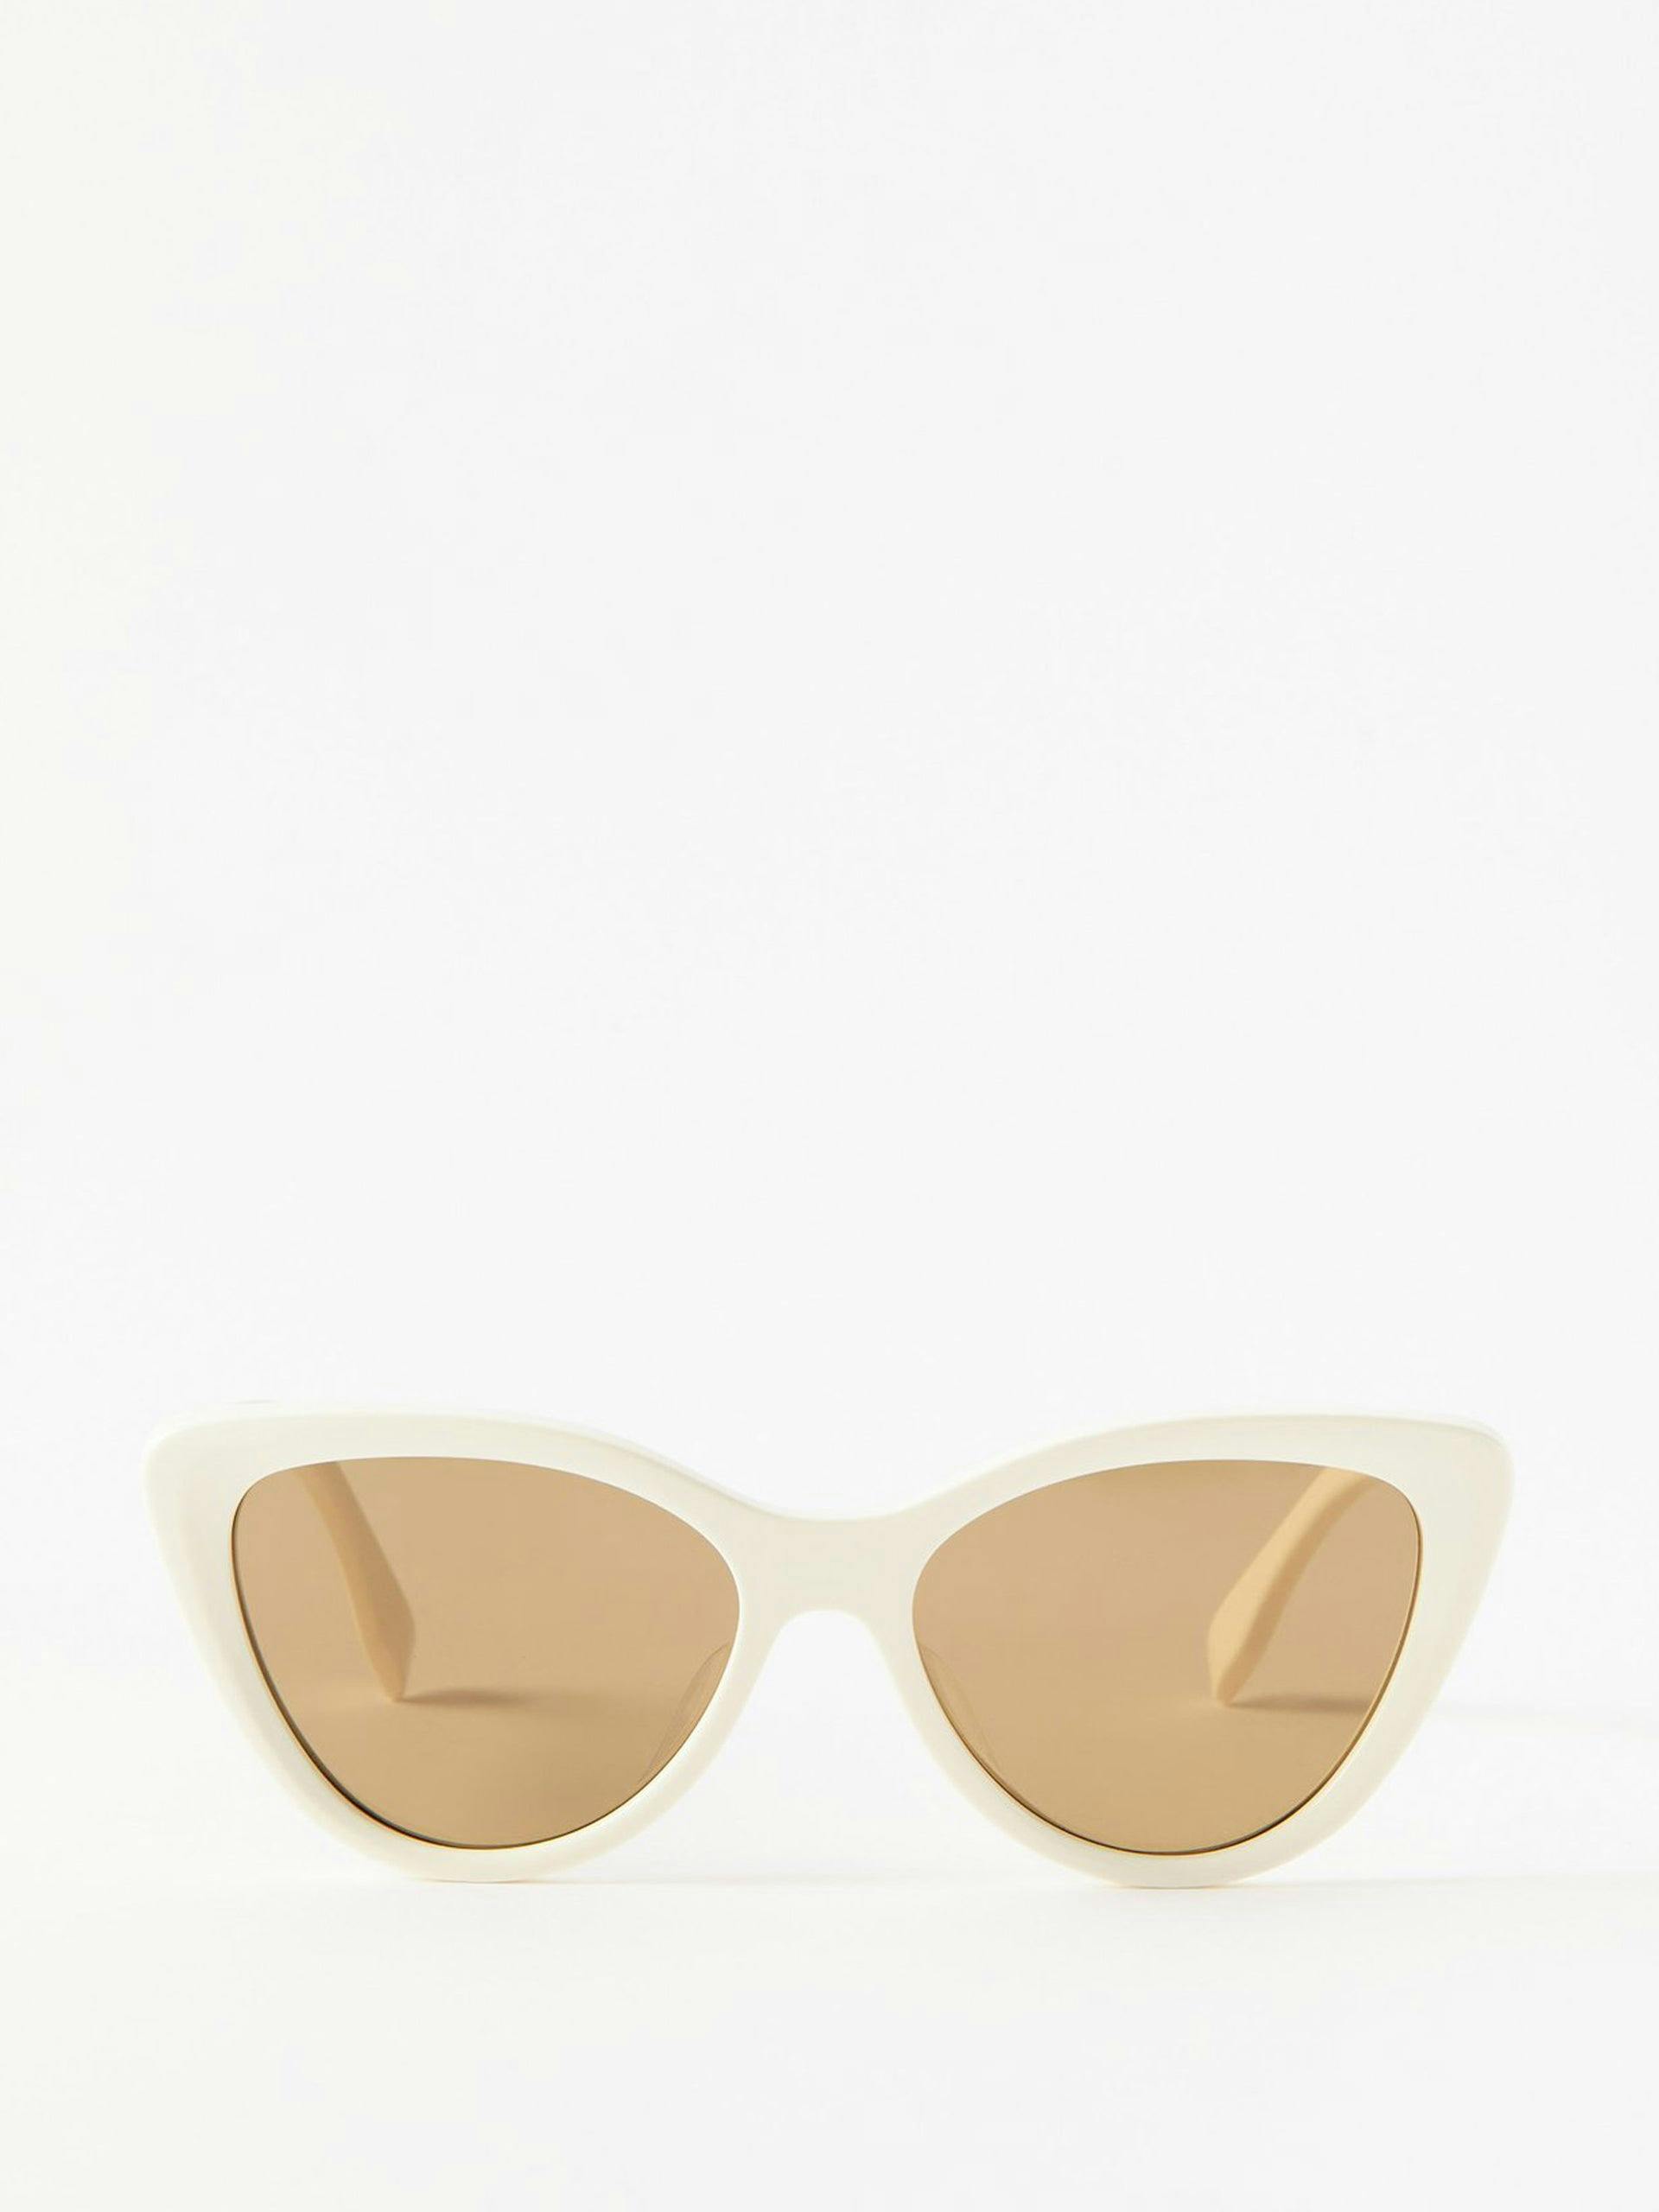 White cat-eye sunglasses